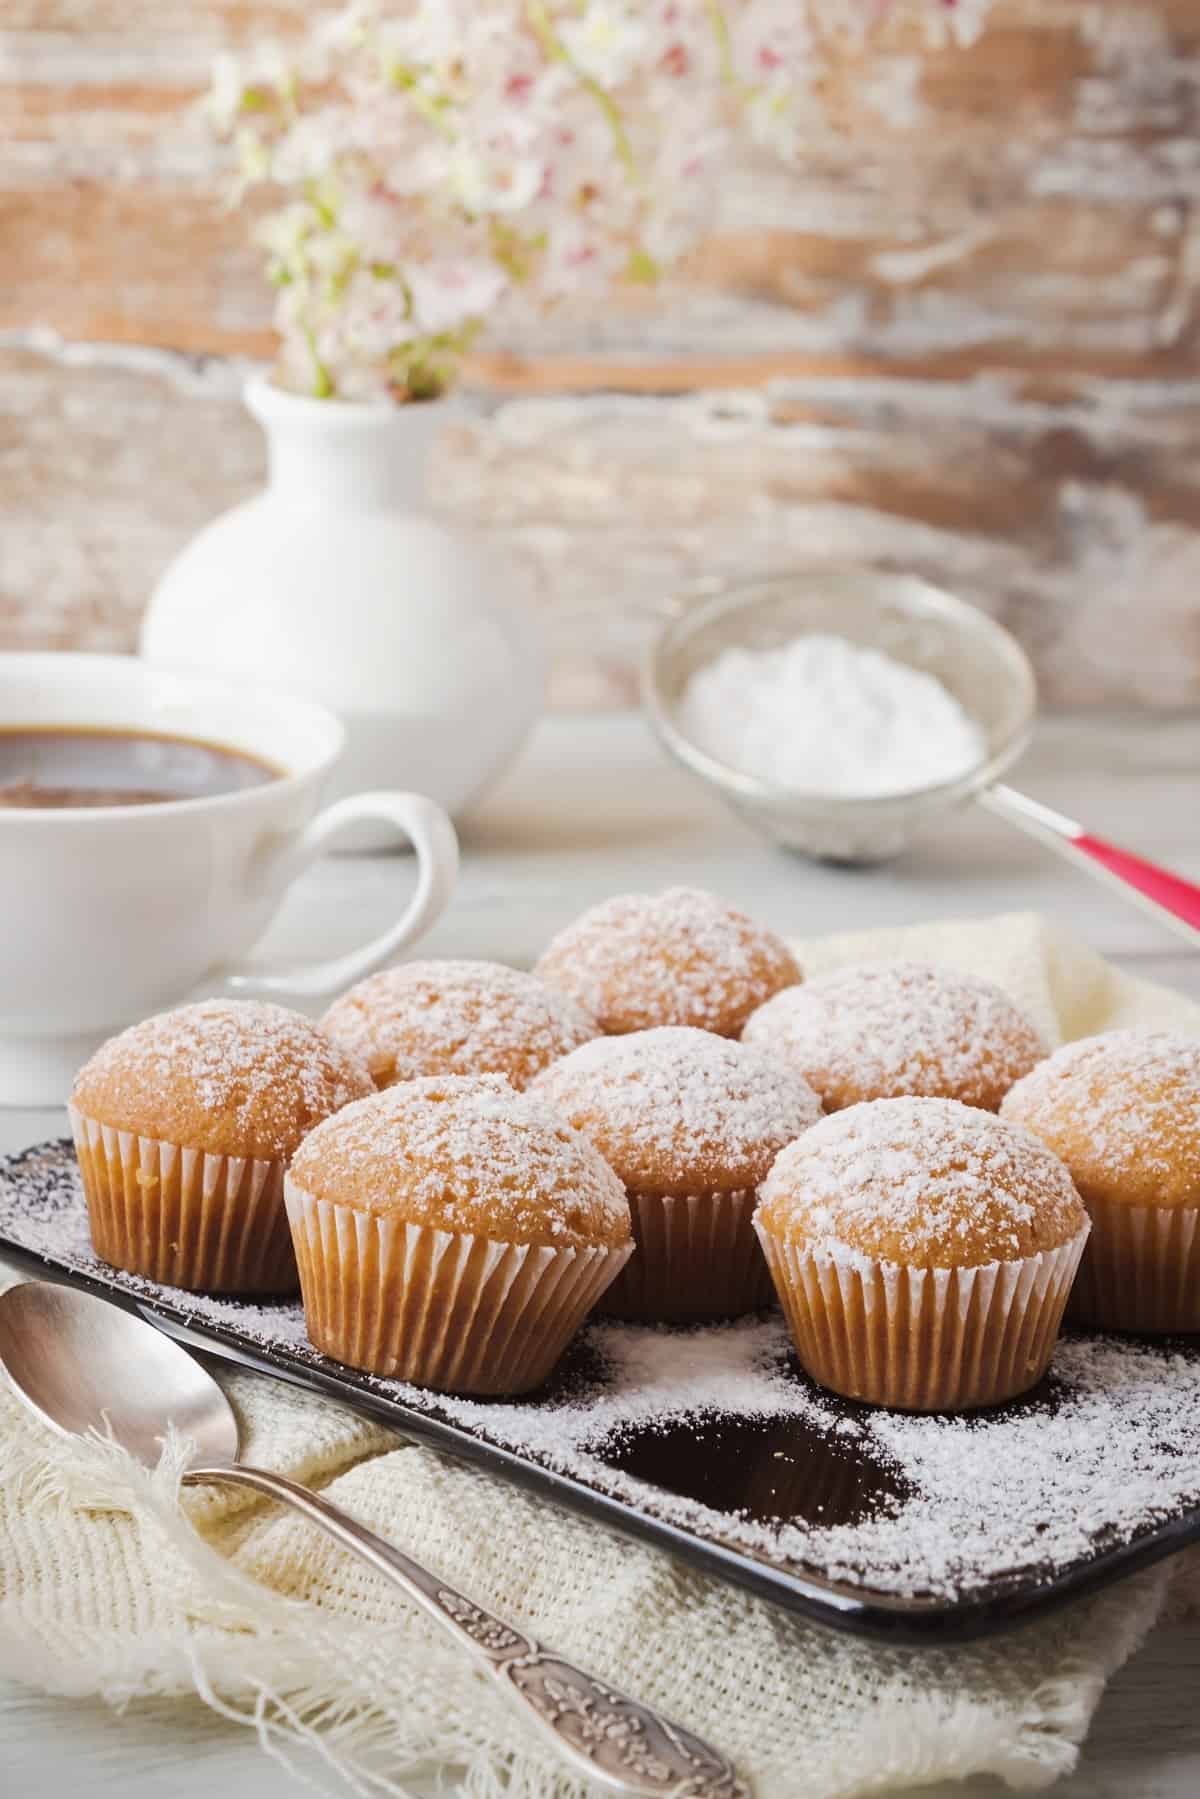 Powdered sugar on cupcakes.